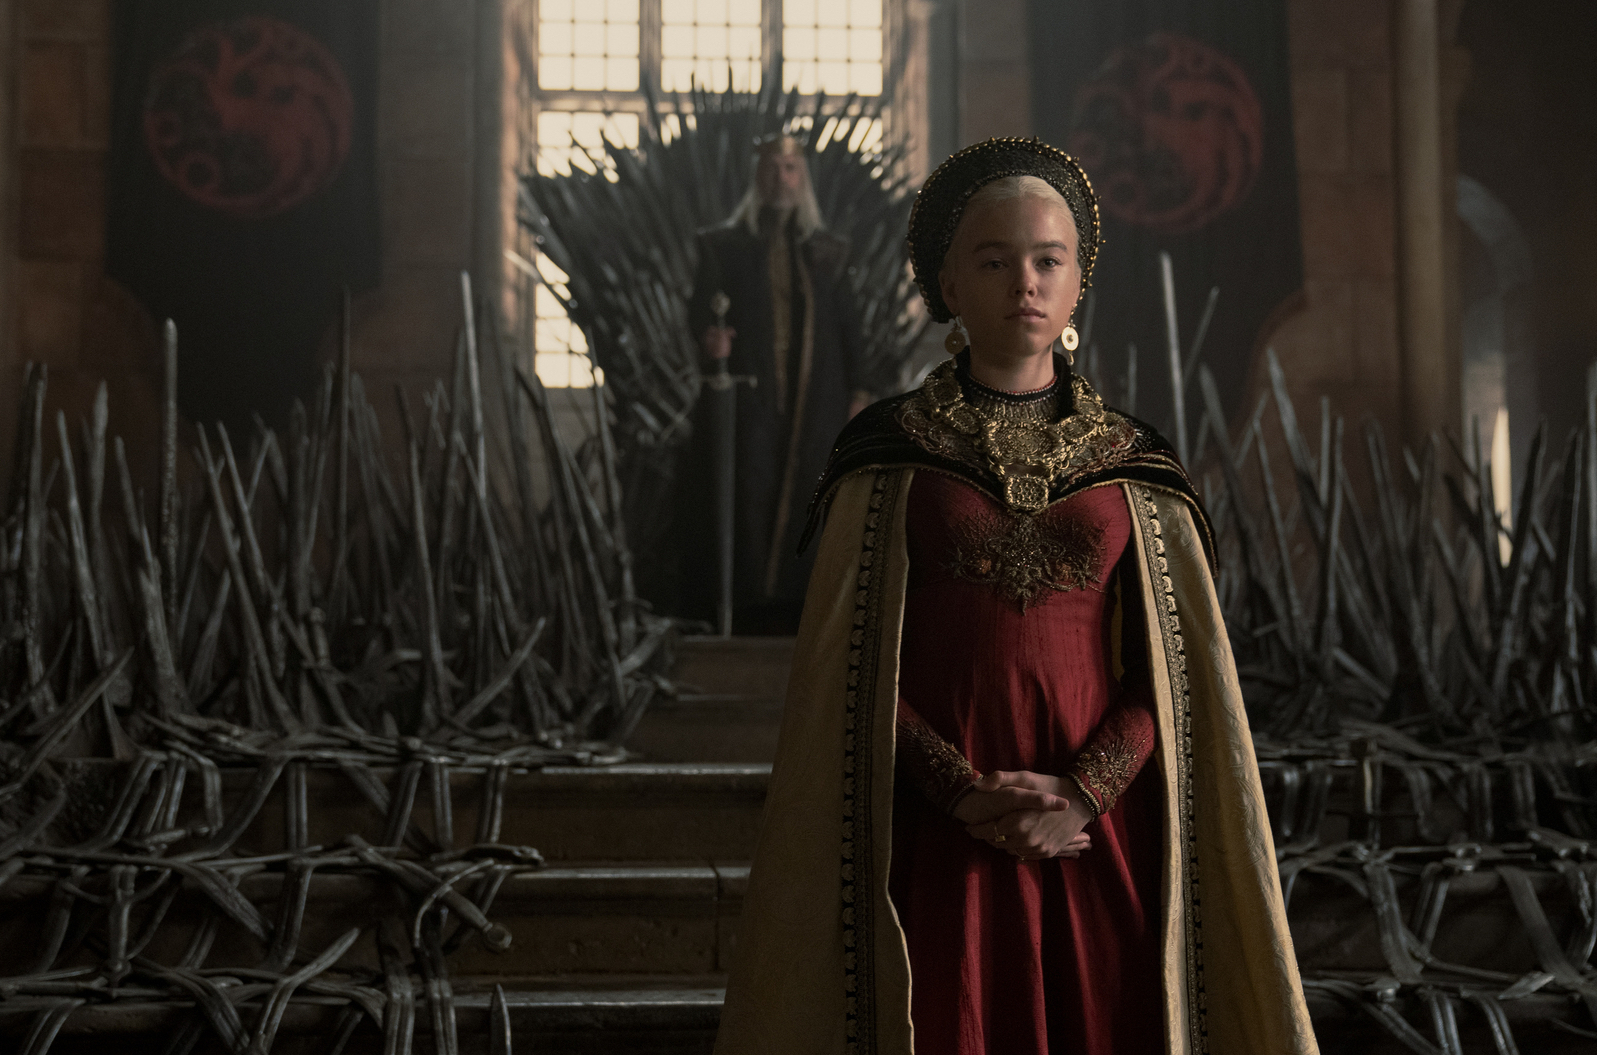 Milly Alcock as Princess Rhaenyra Targaryen, Paddy Considine as King Viserys I Targaryen